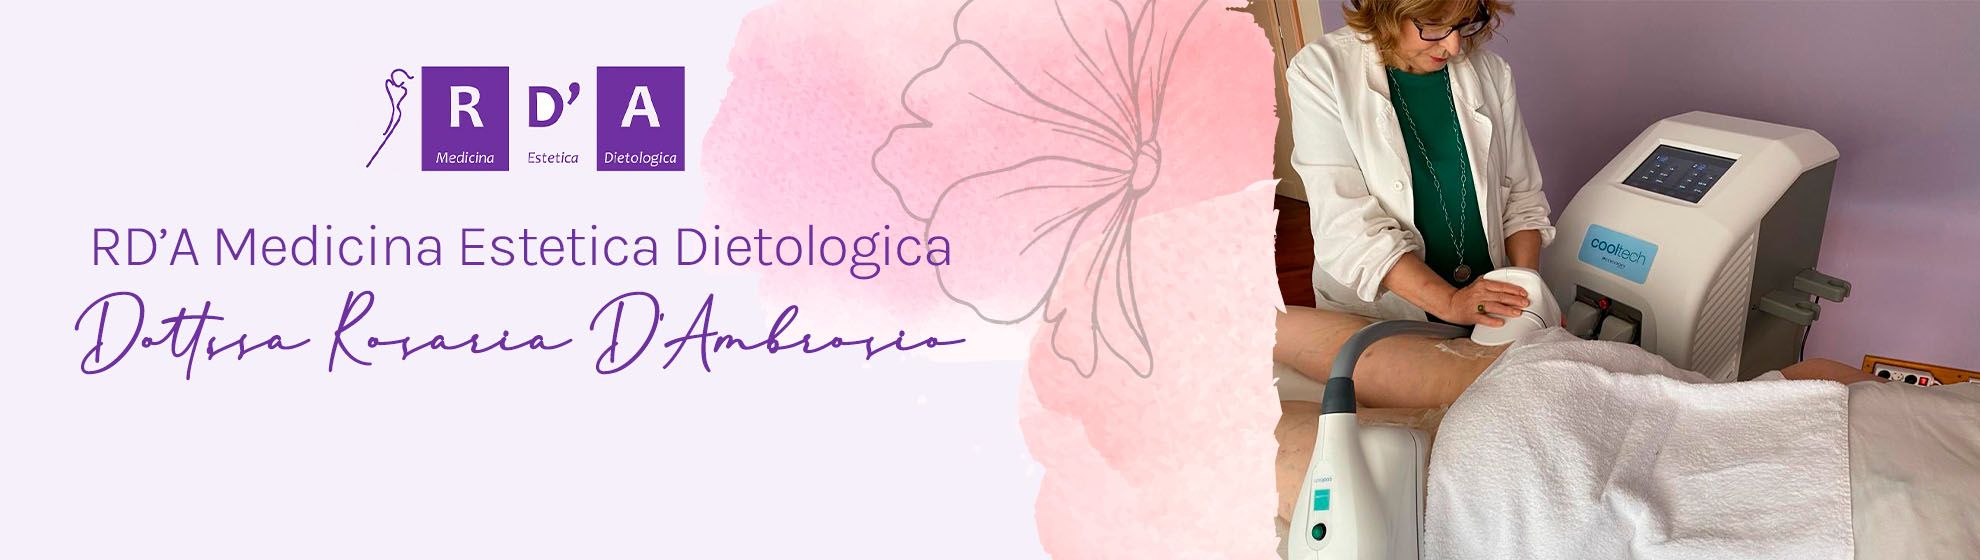 RD’A Medicina Estetica Dietologica - Dott.ssa Rosaria D'Ambrosio